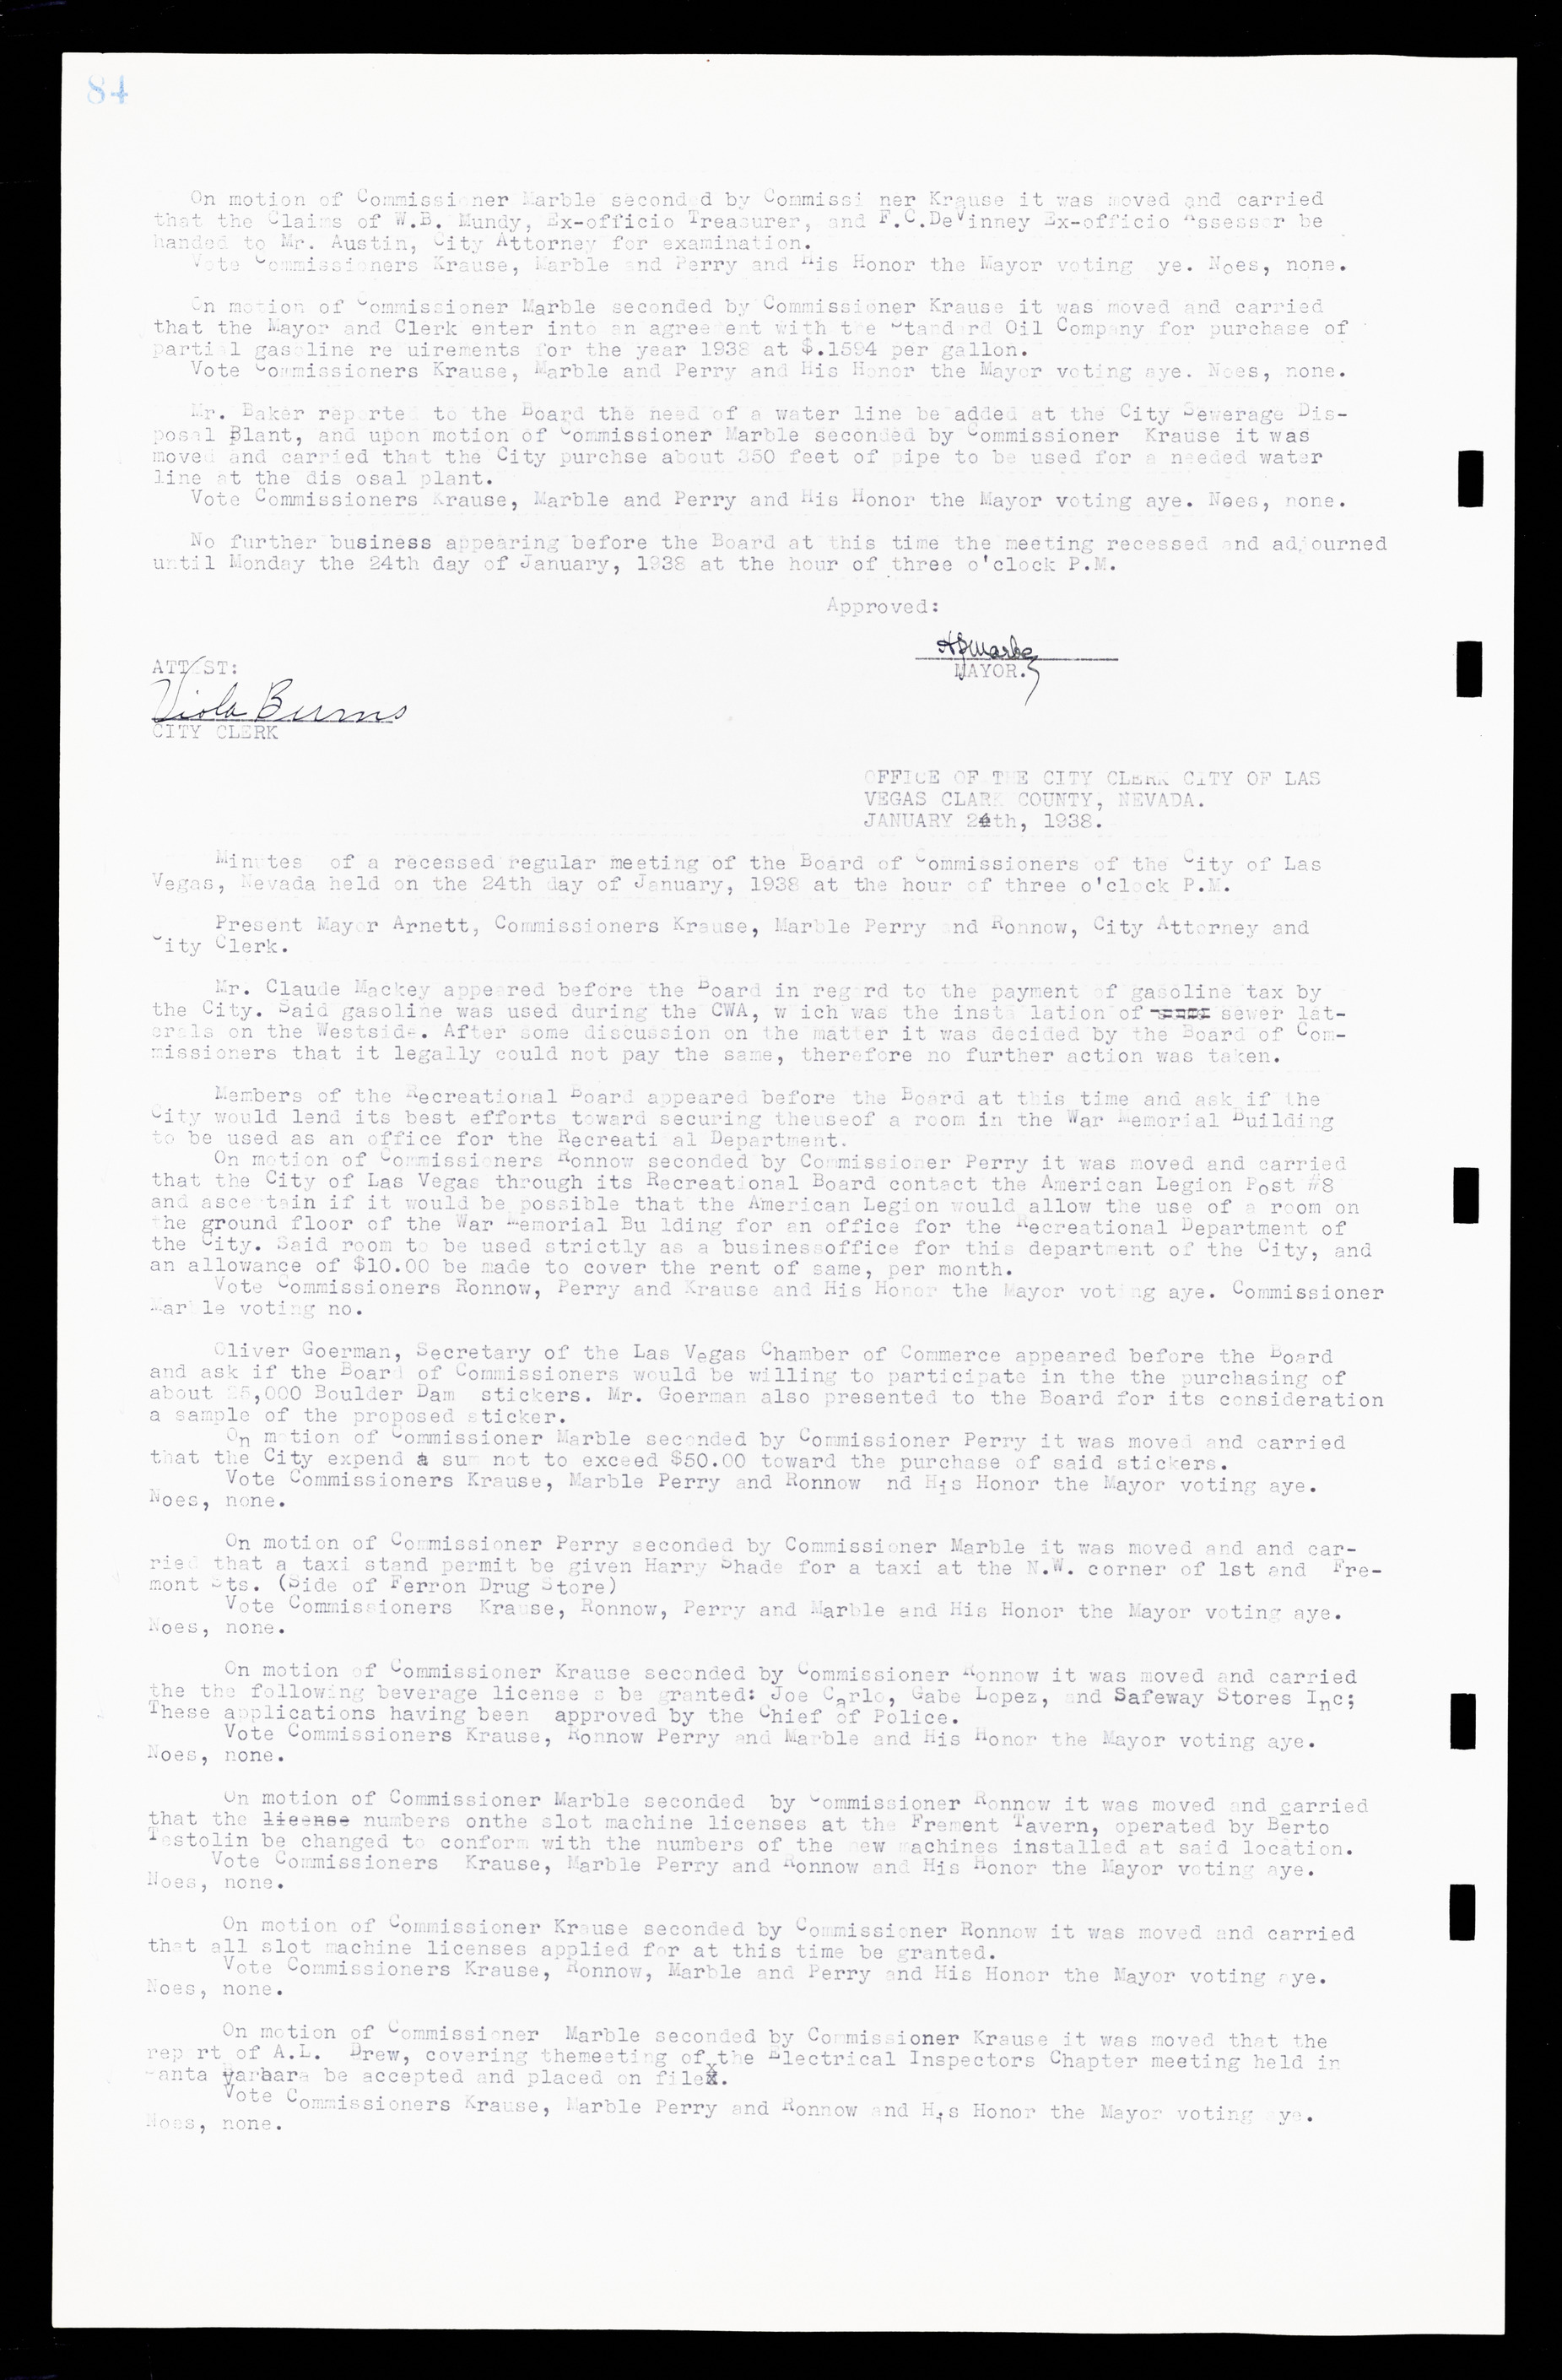 Las Vegas City Commission Minutes, February 17, 1937 to August 4, 1942, lvc000004-95